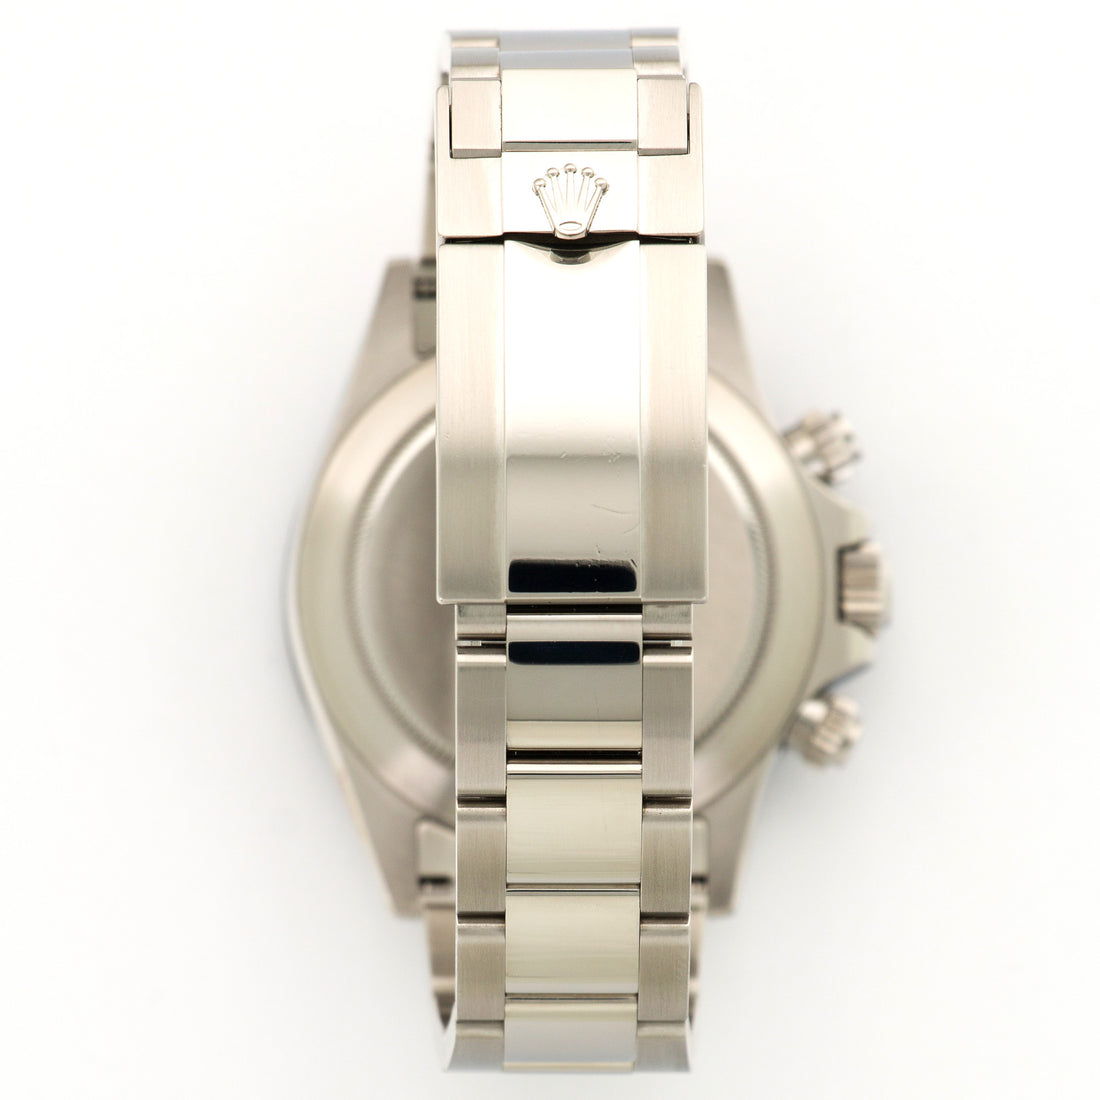 Rolex Cosmograph Daytona Ceramic Watch Ref. 116500